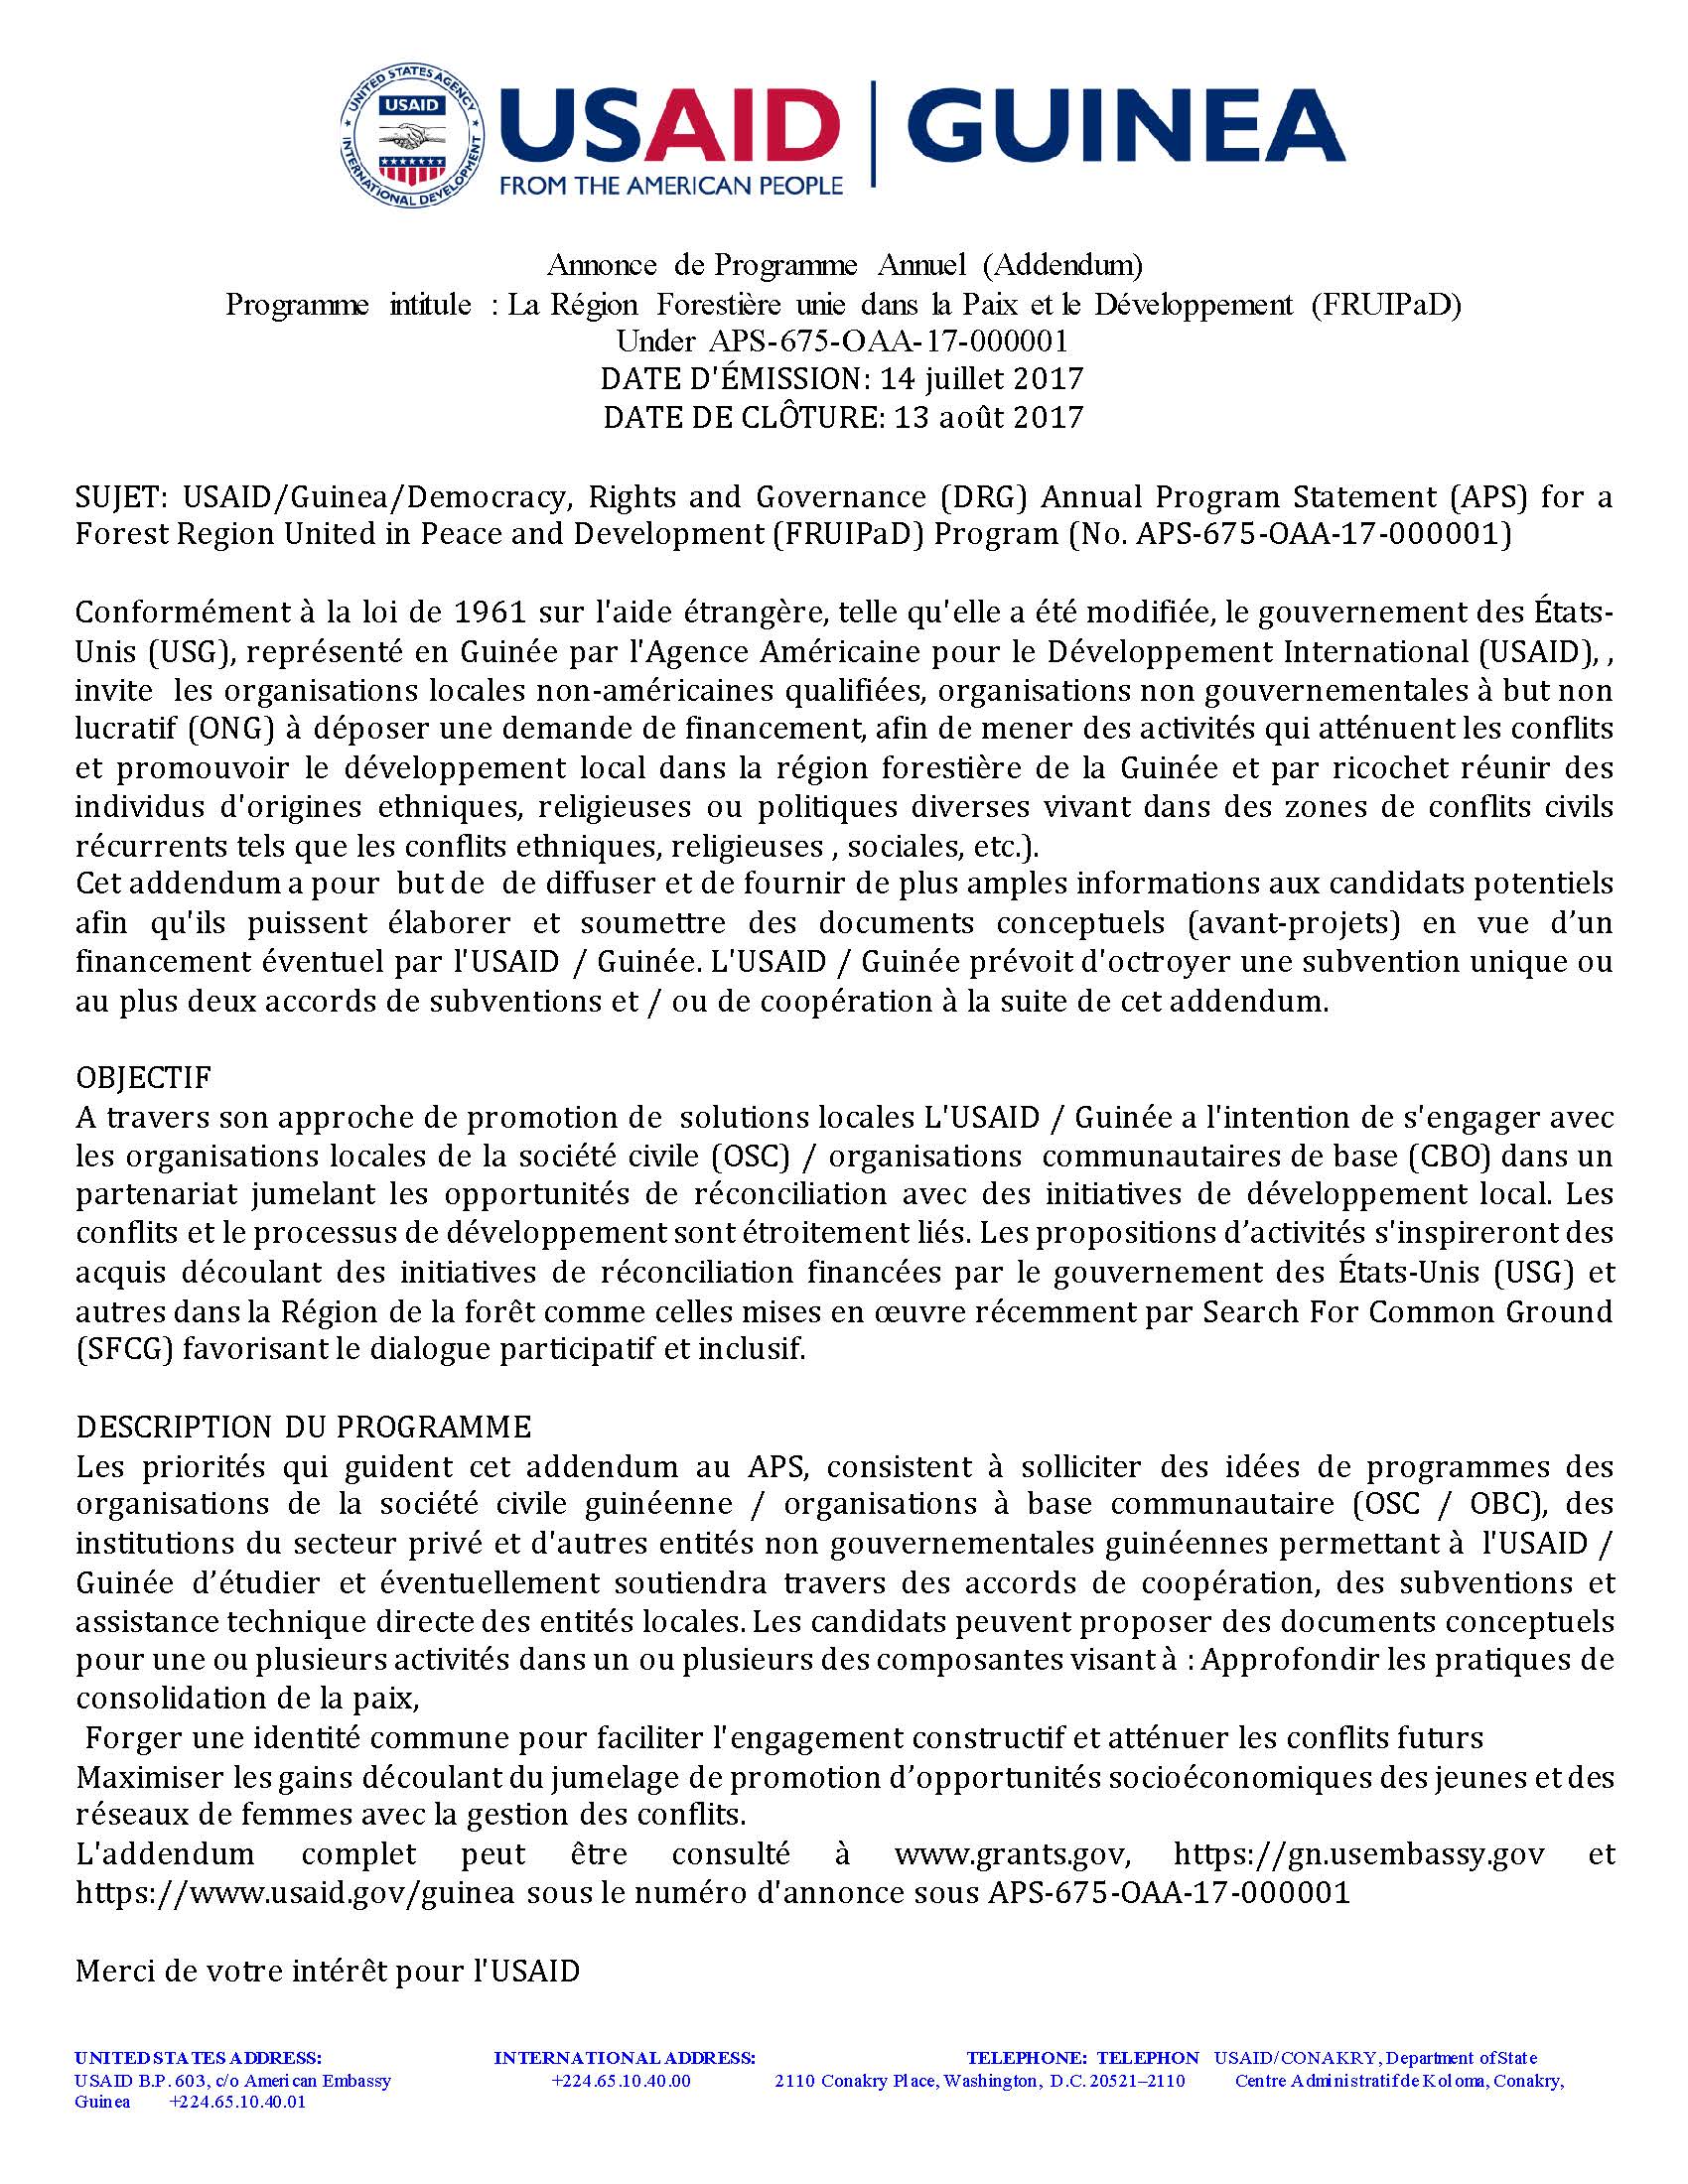 Guinea Annonce de Programme Annuel (Addendum) APS-675-OAA-17-000001